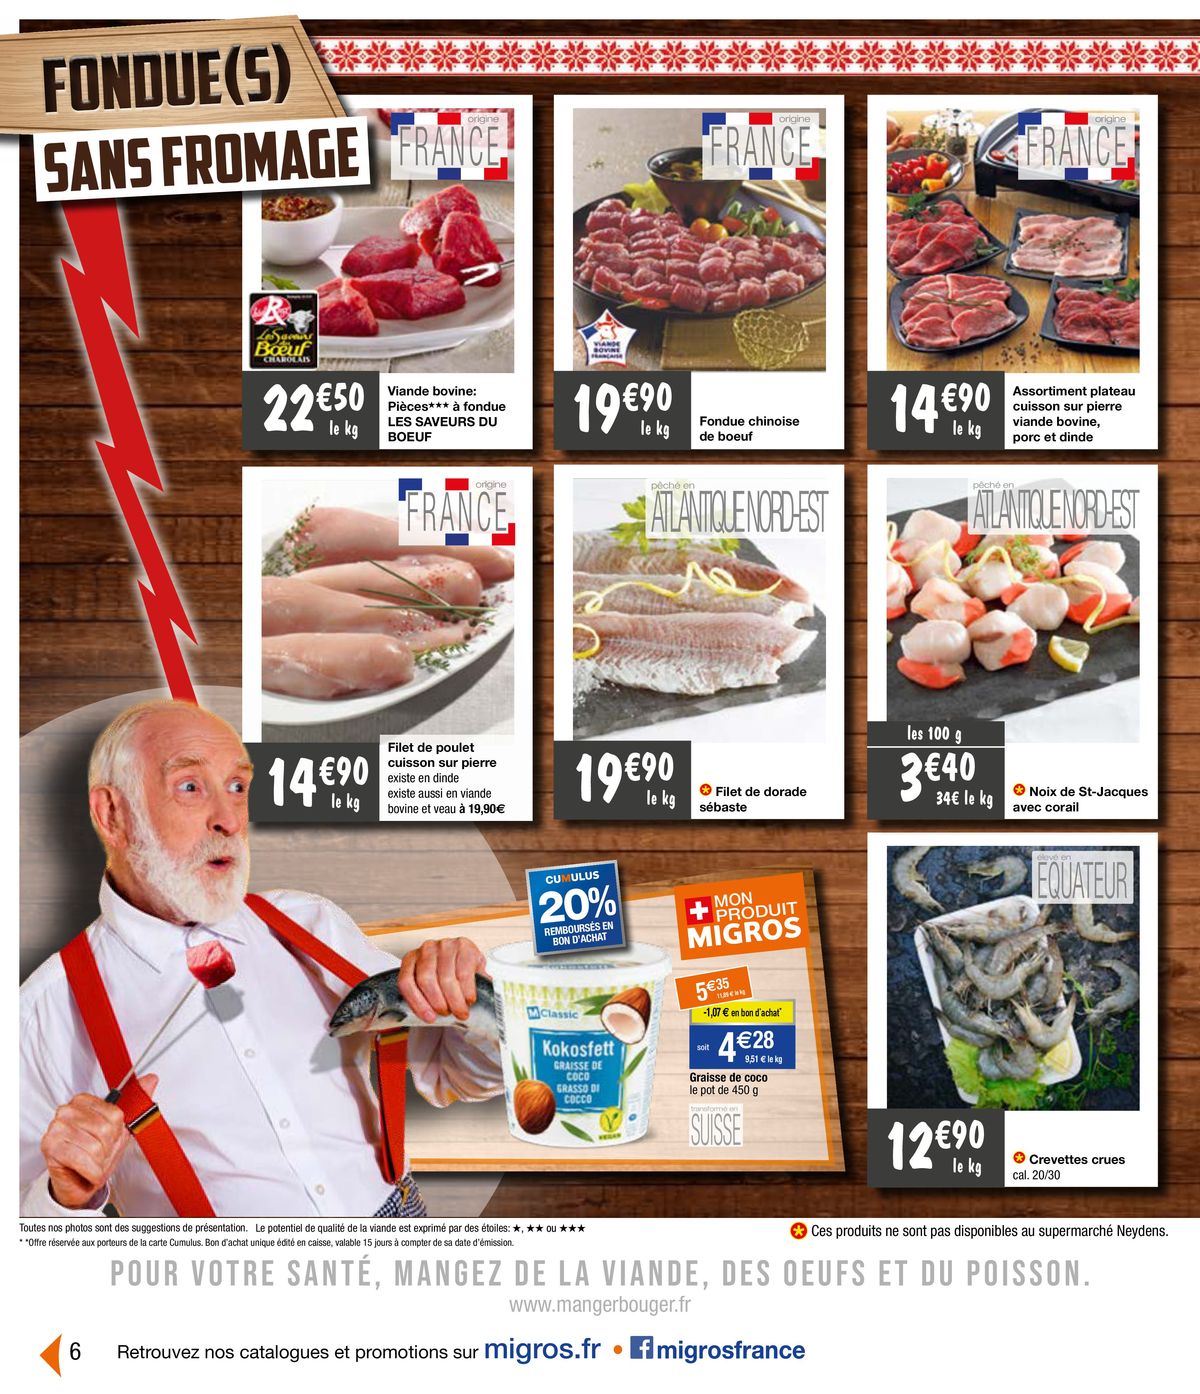 Catalogue Foundue VS Raclette, page 00006